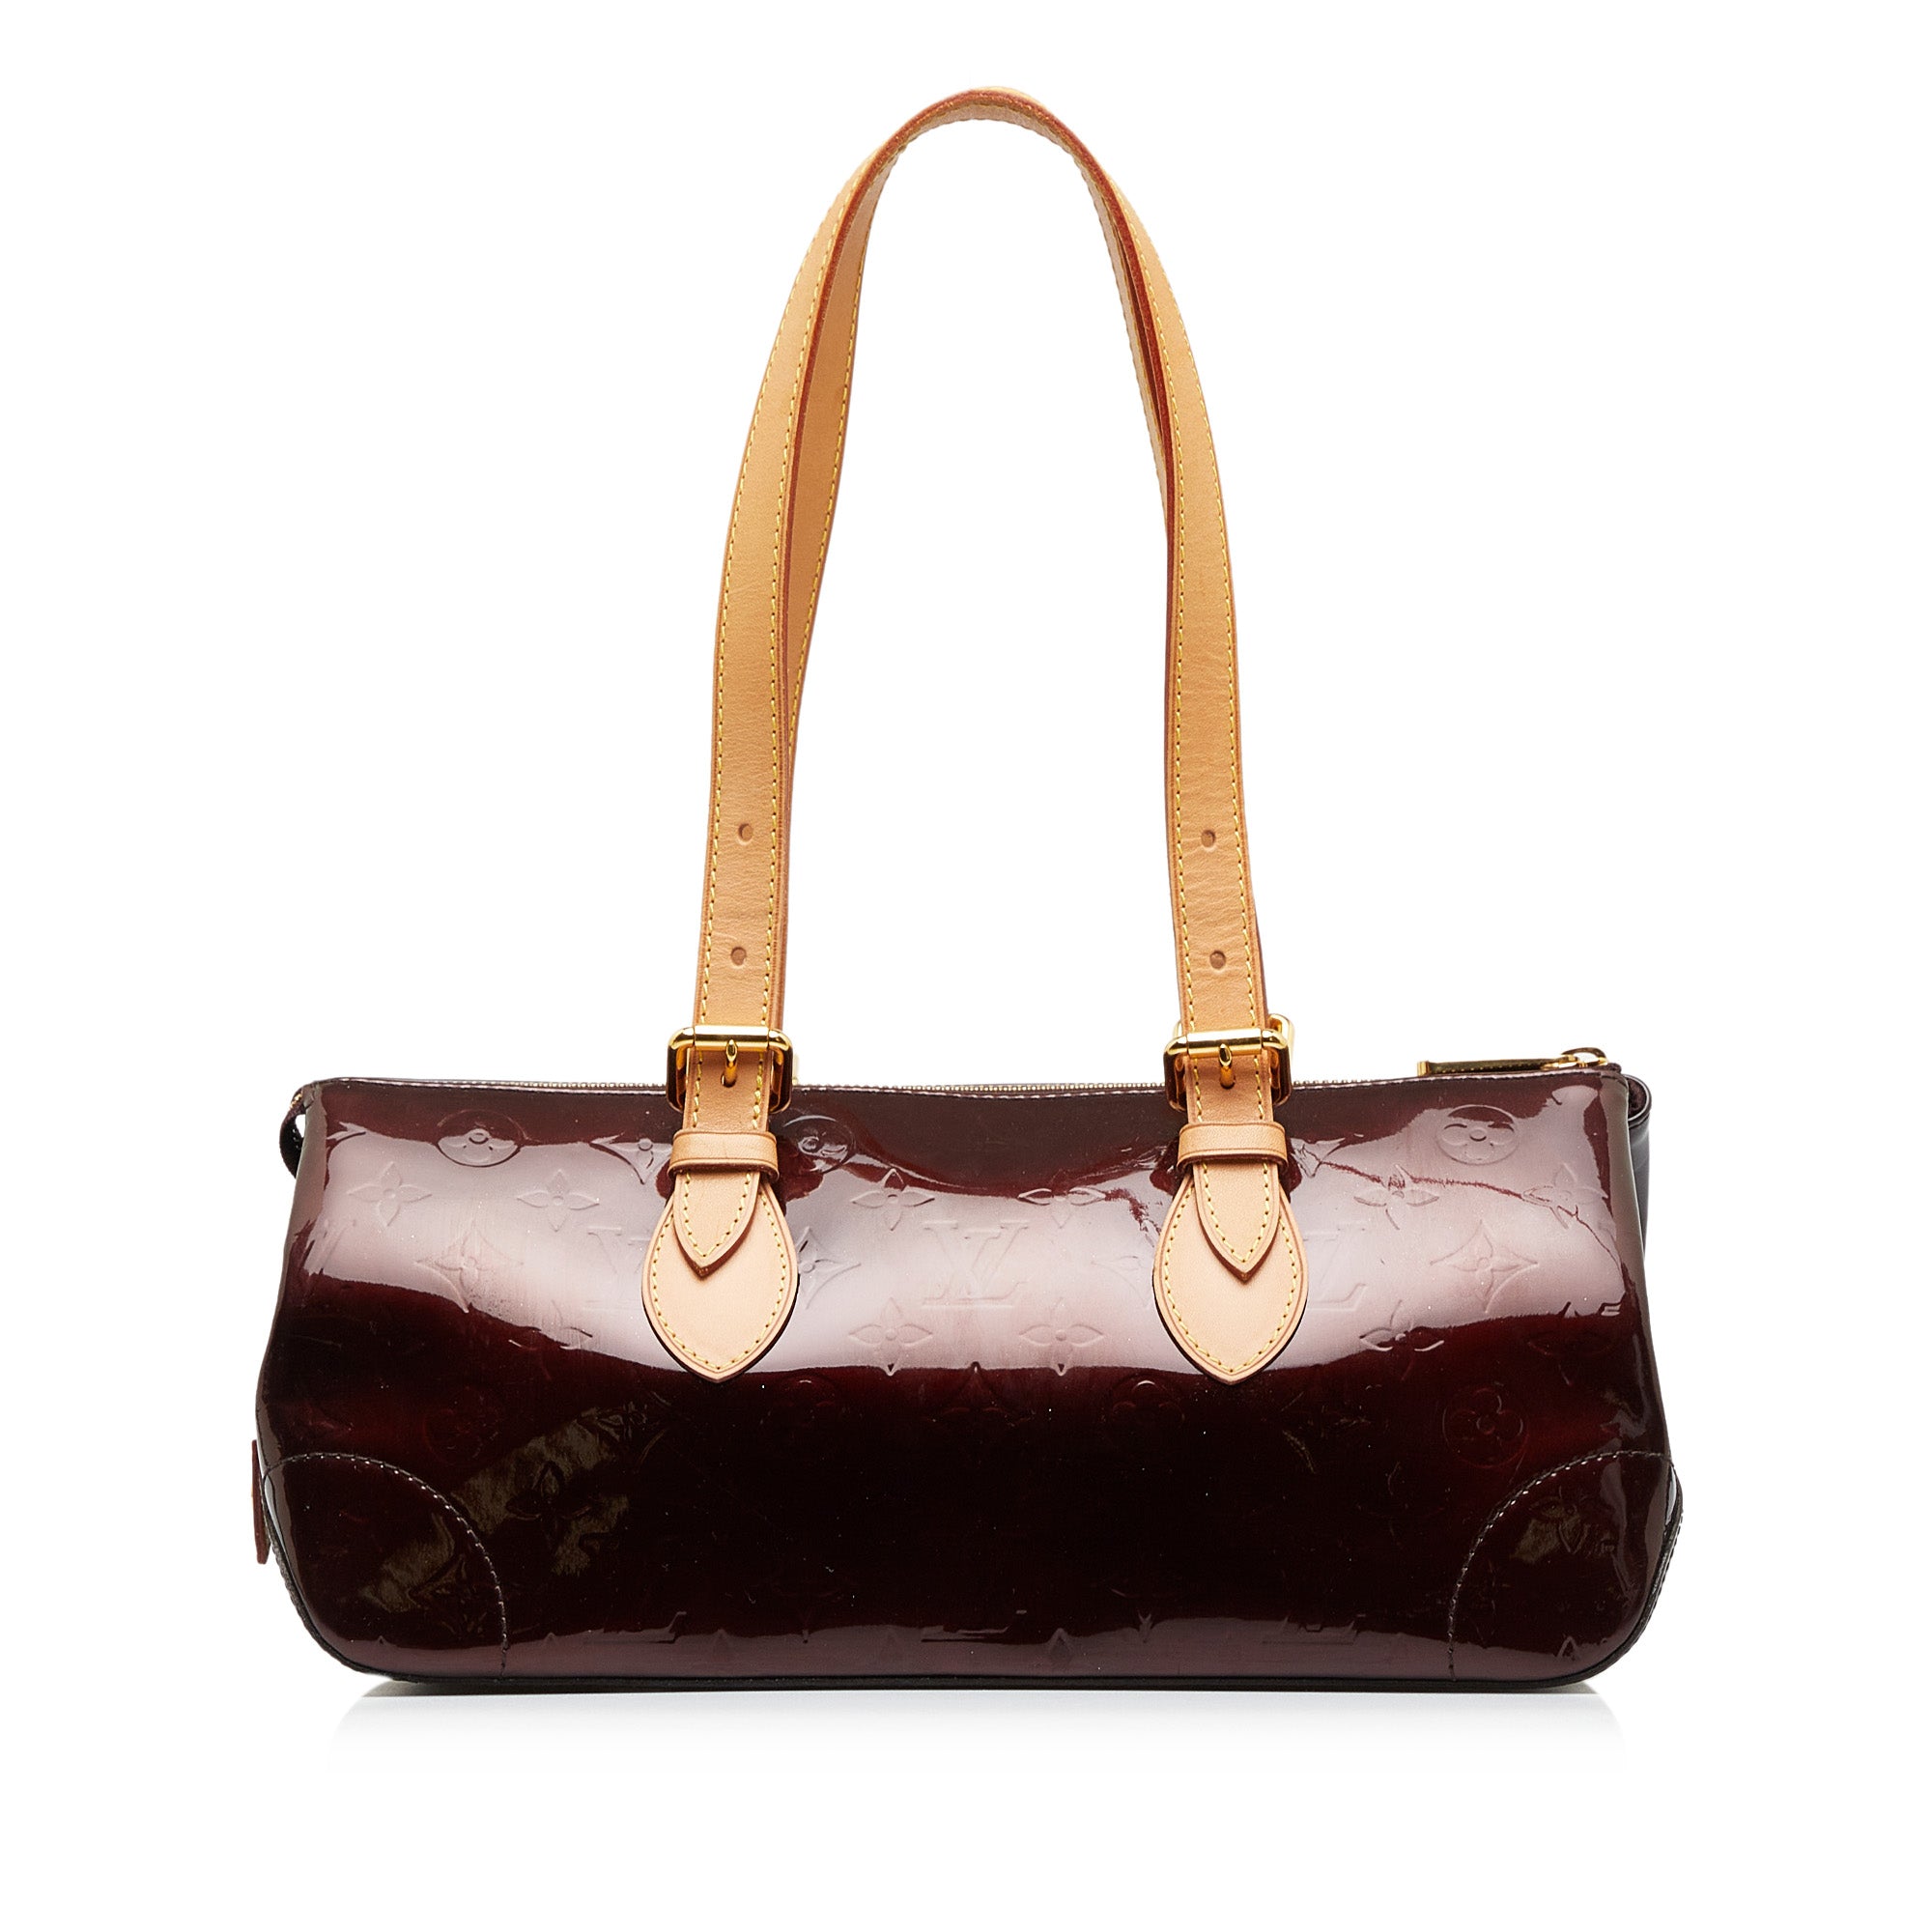 Shop for Louis Vuitton Amarante Vernis Leather Rosewood Ave Bag